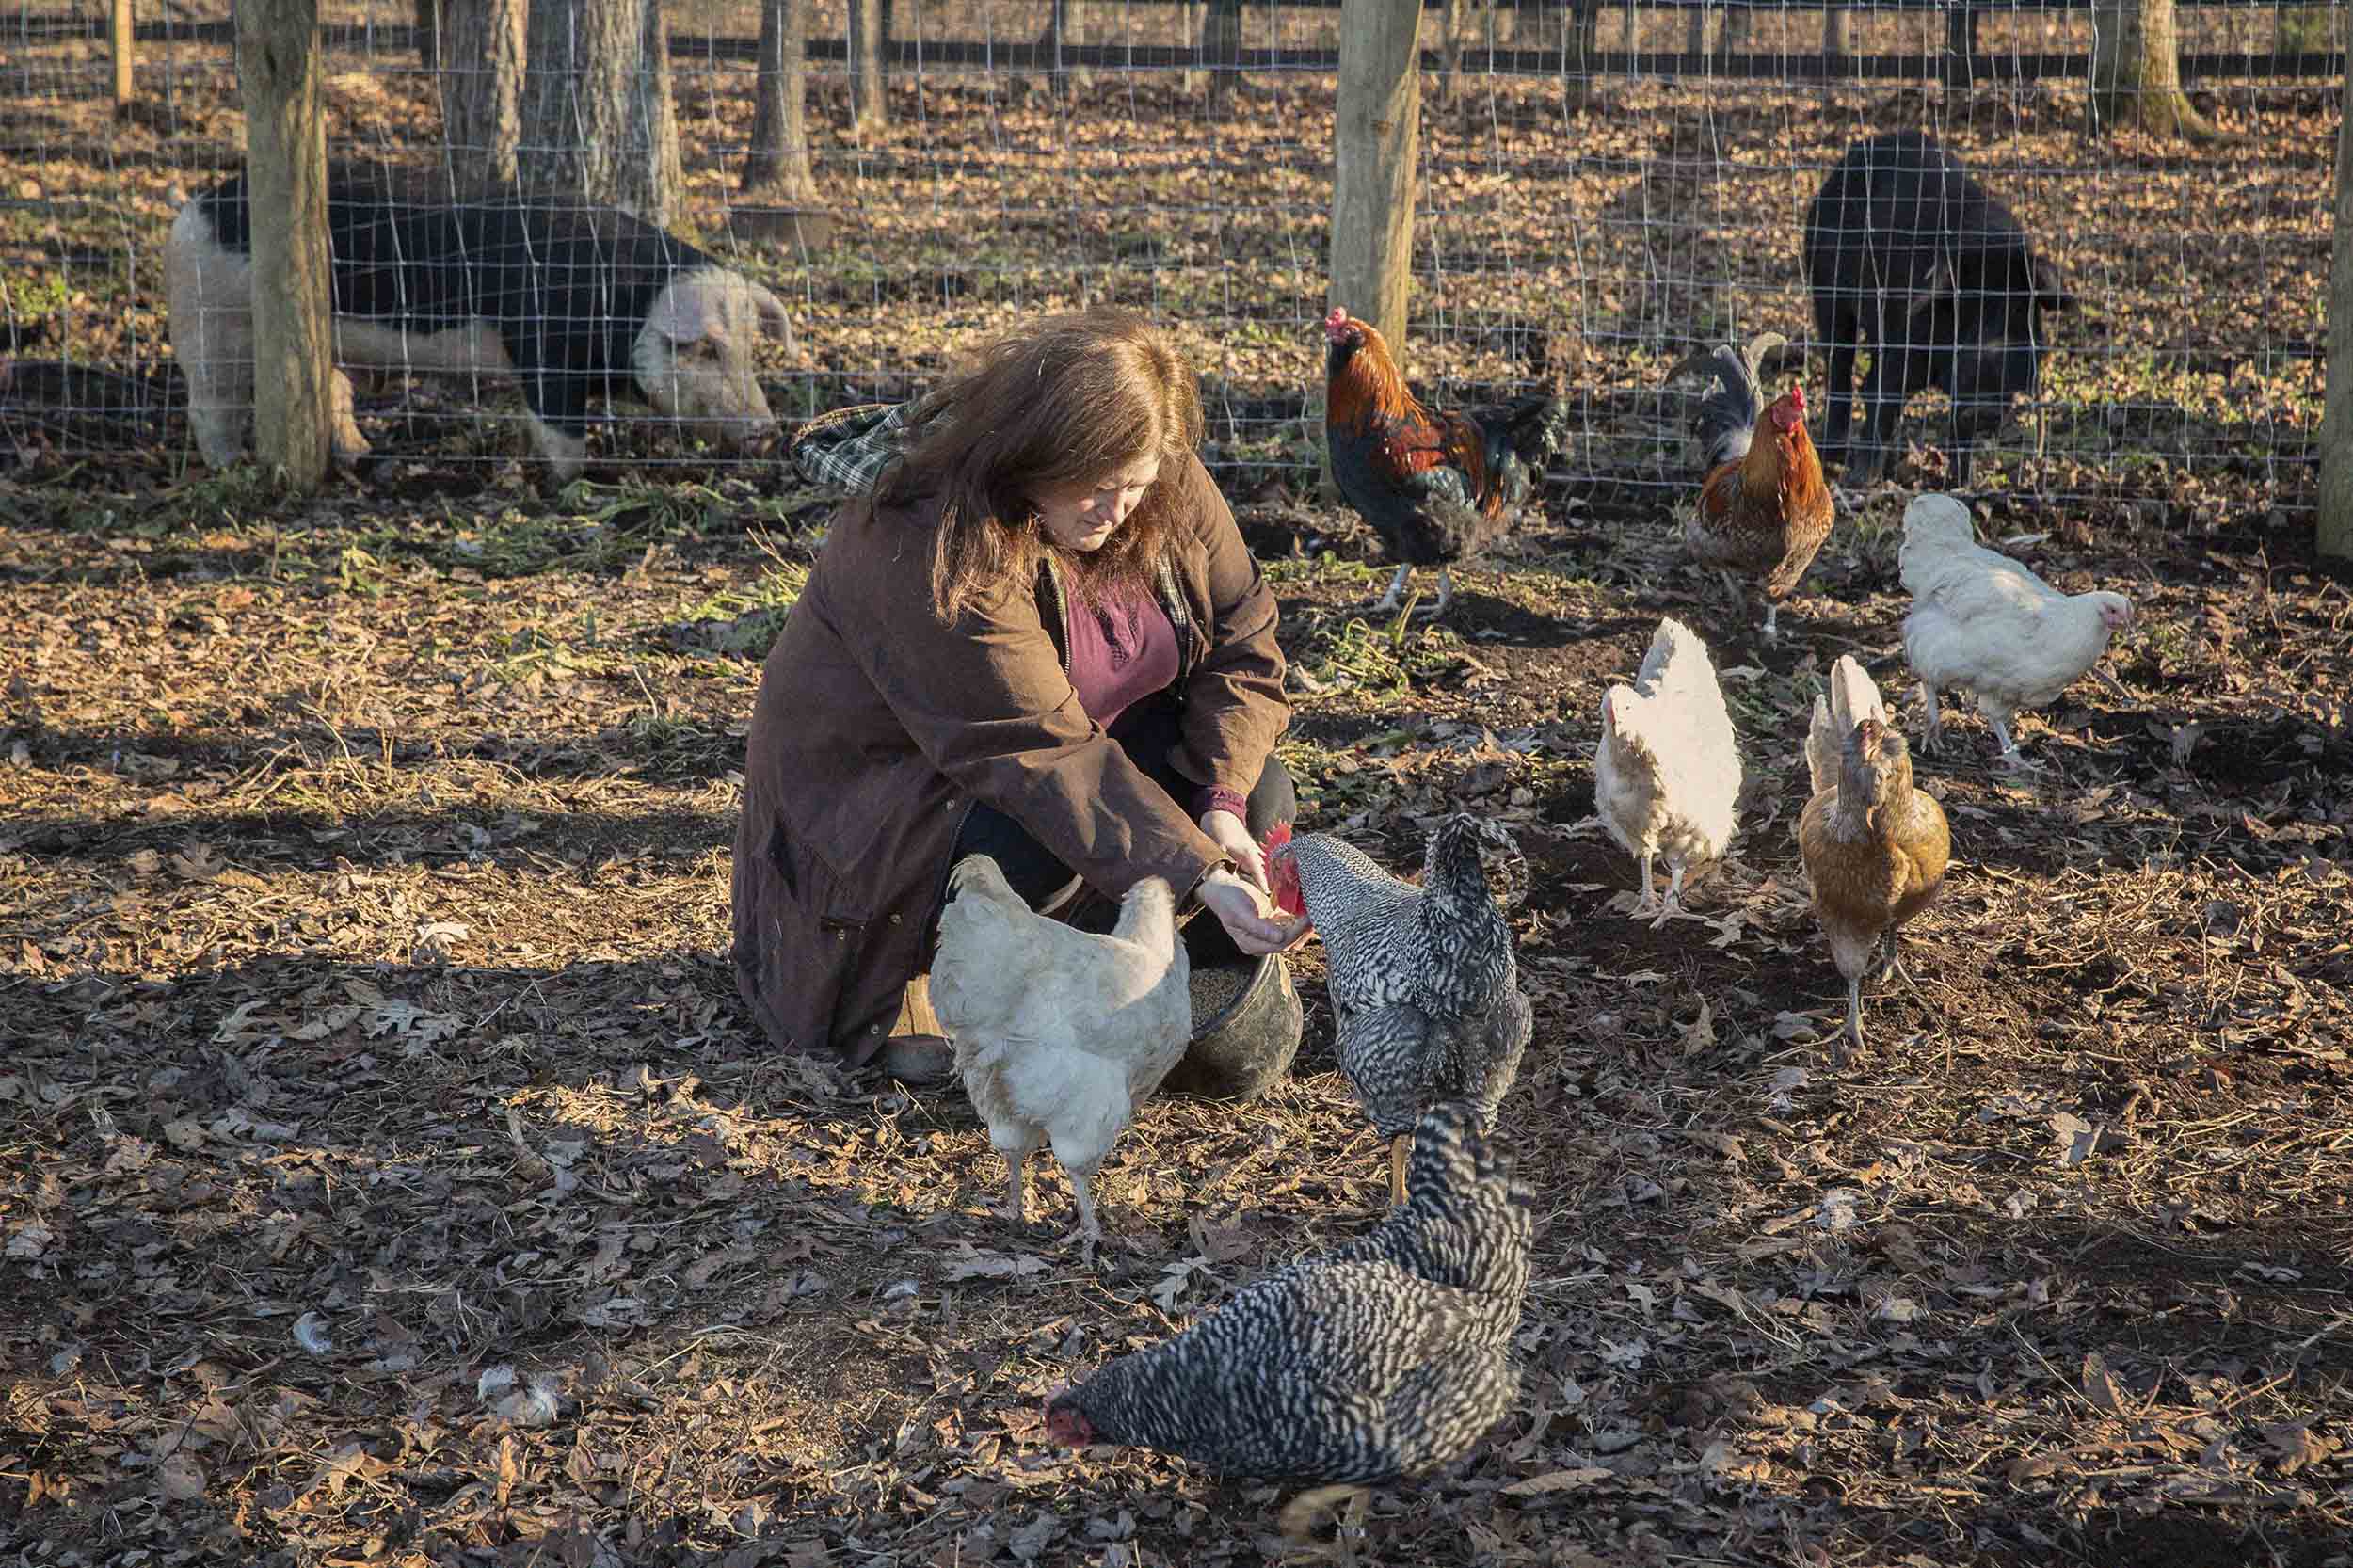 Sarah Osborne-barwick bending down feeding chickens from her hand